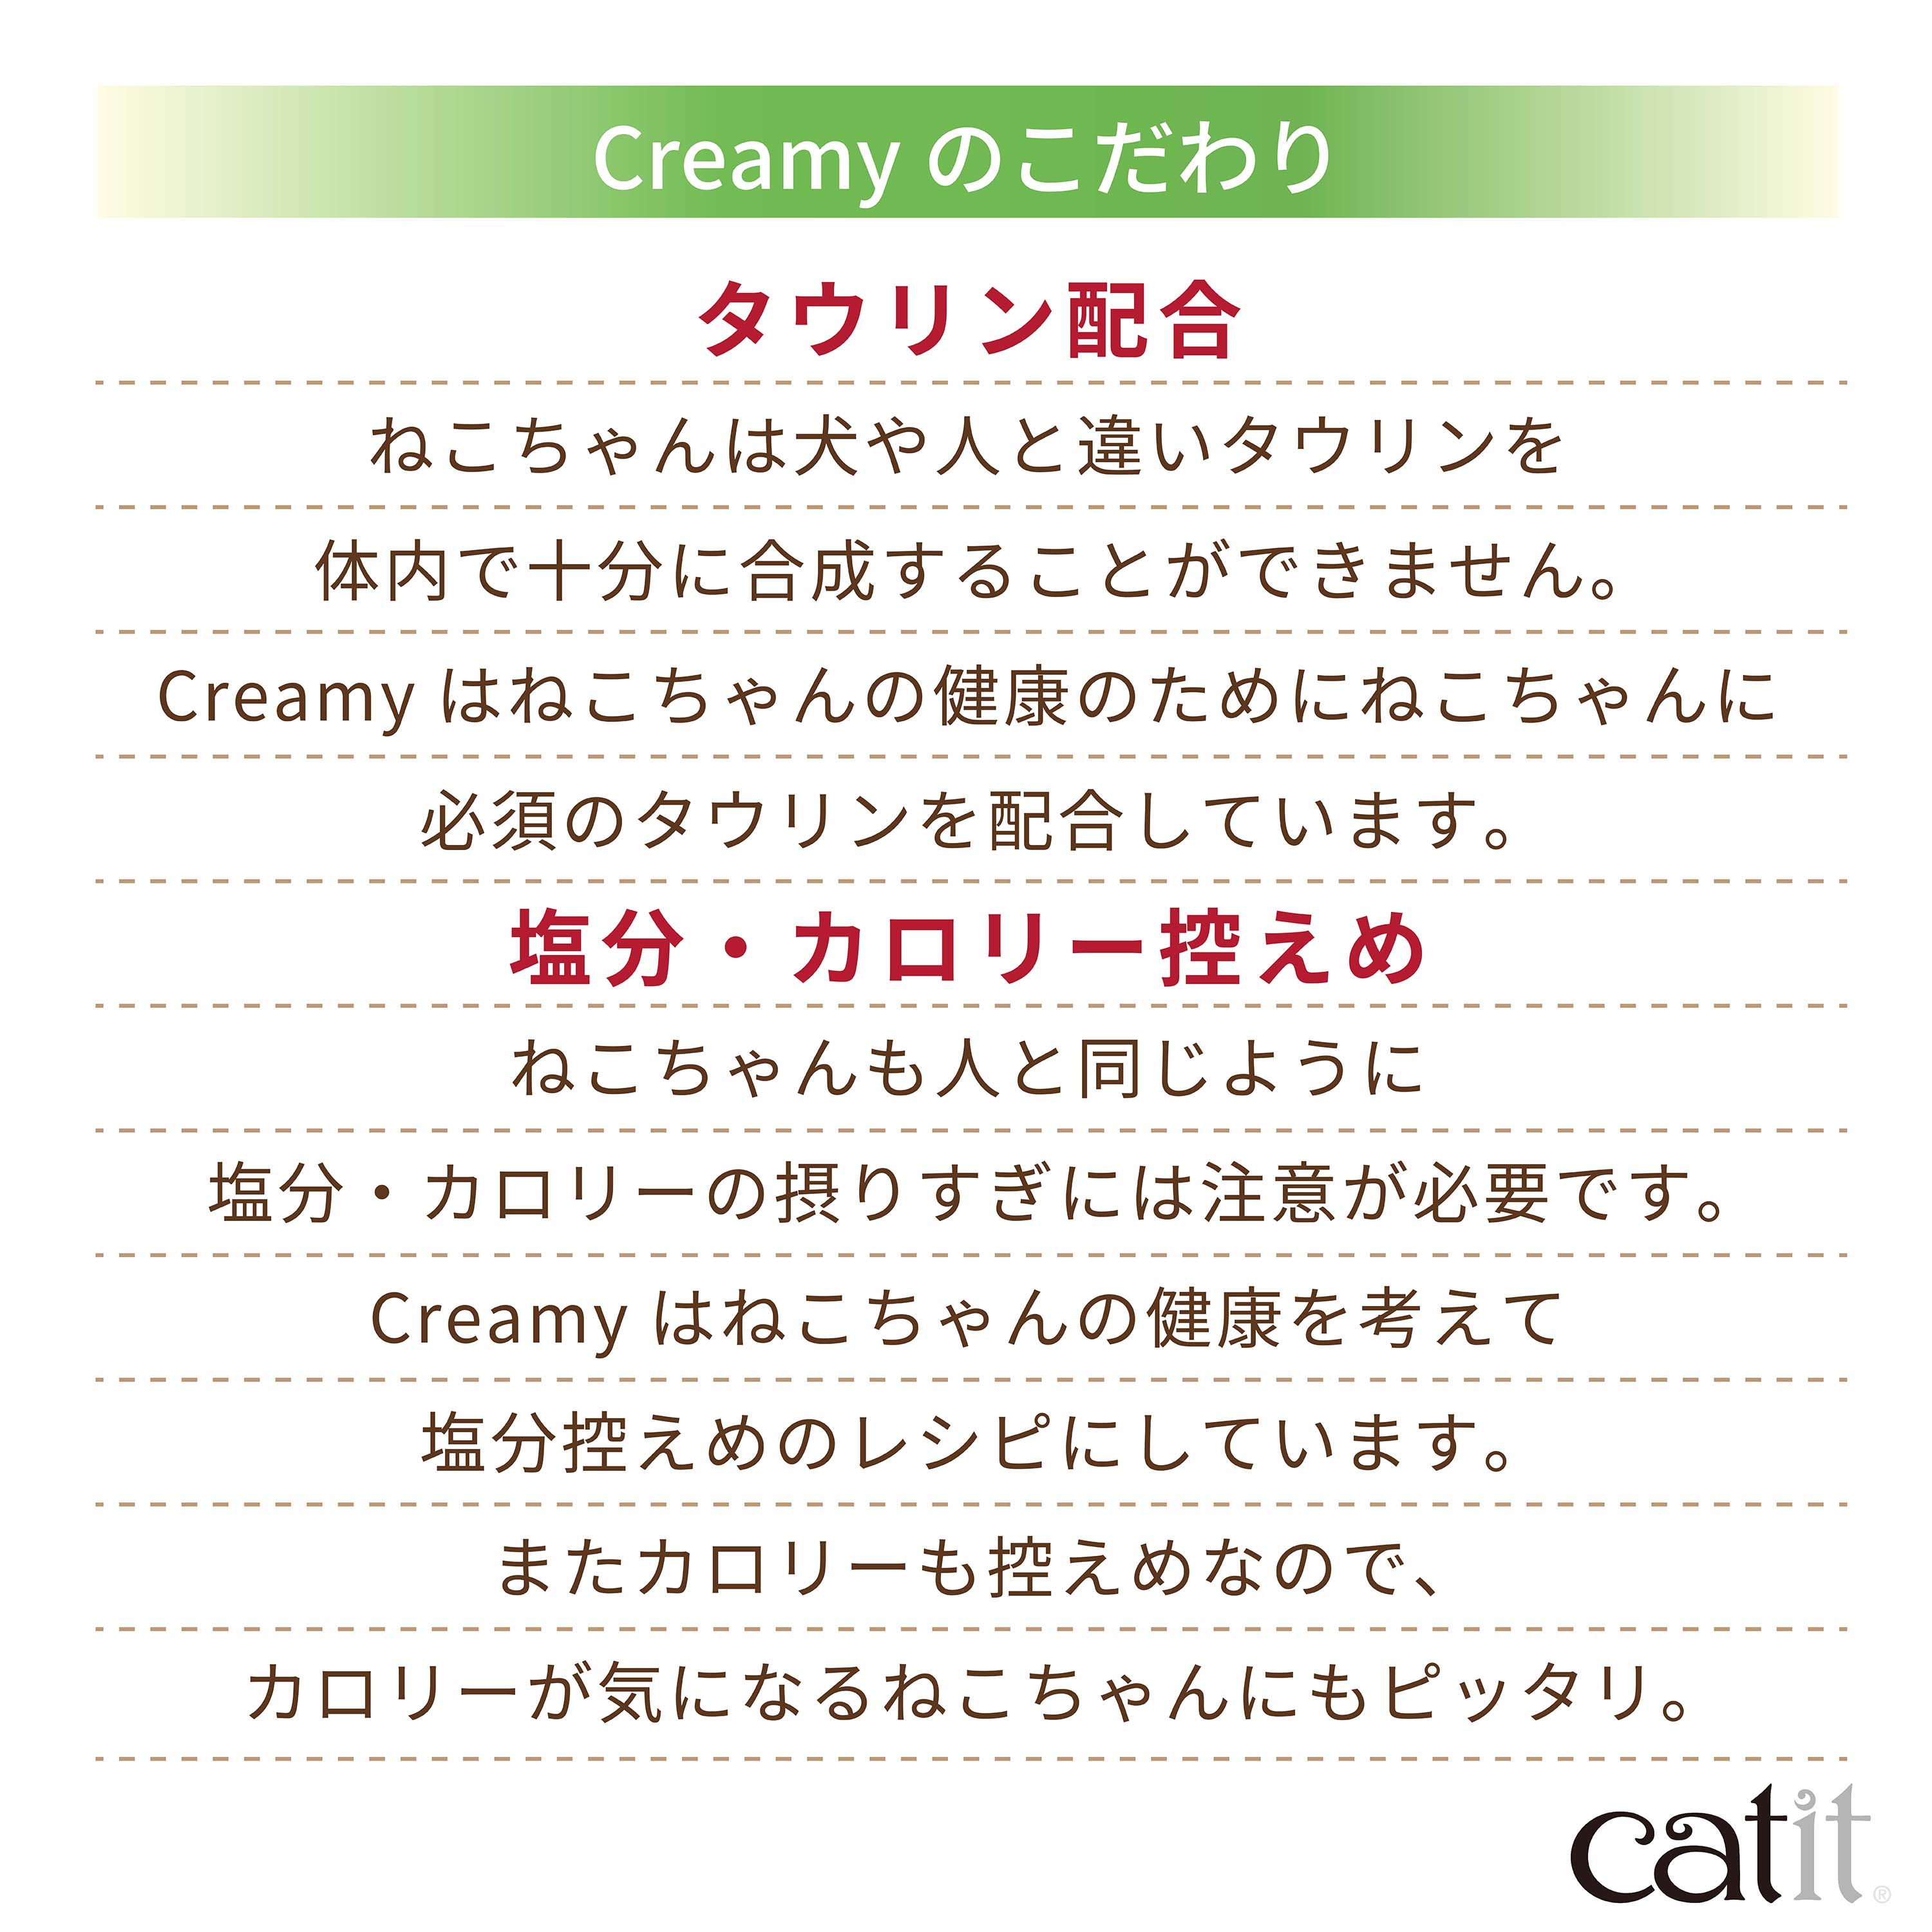 Catit Creamy サーモン 12本入